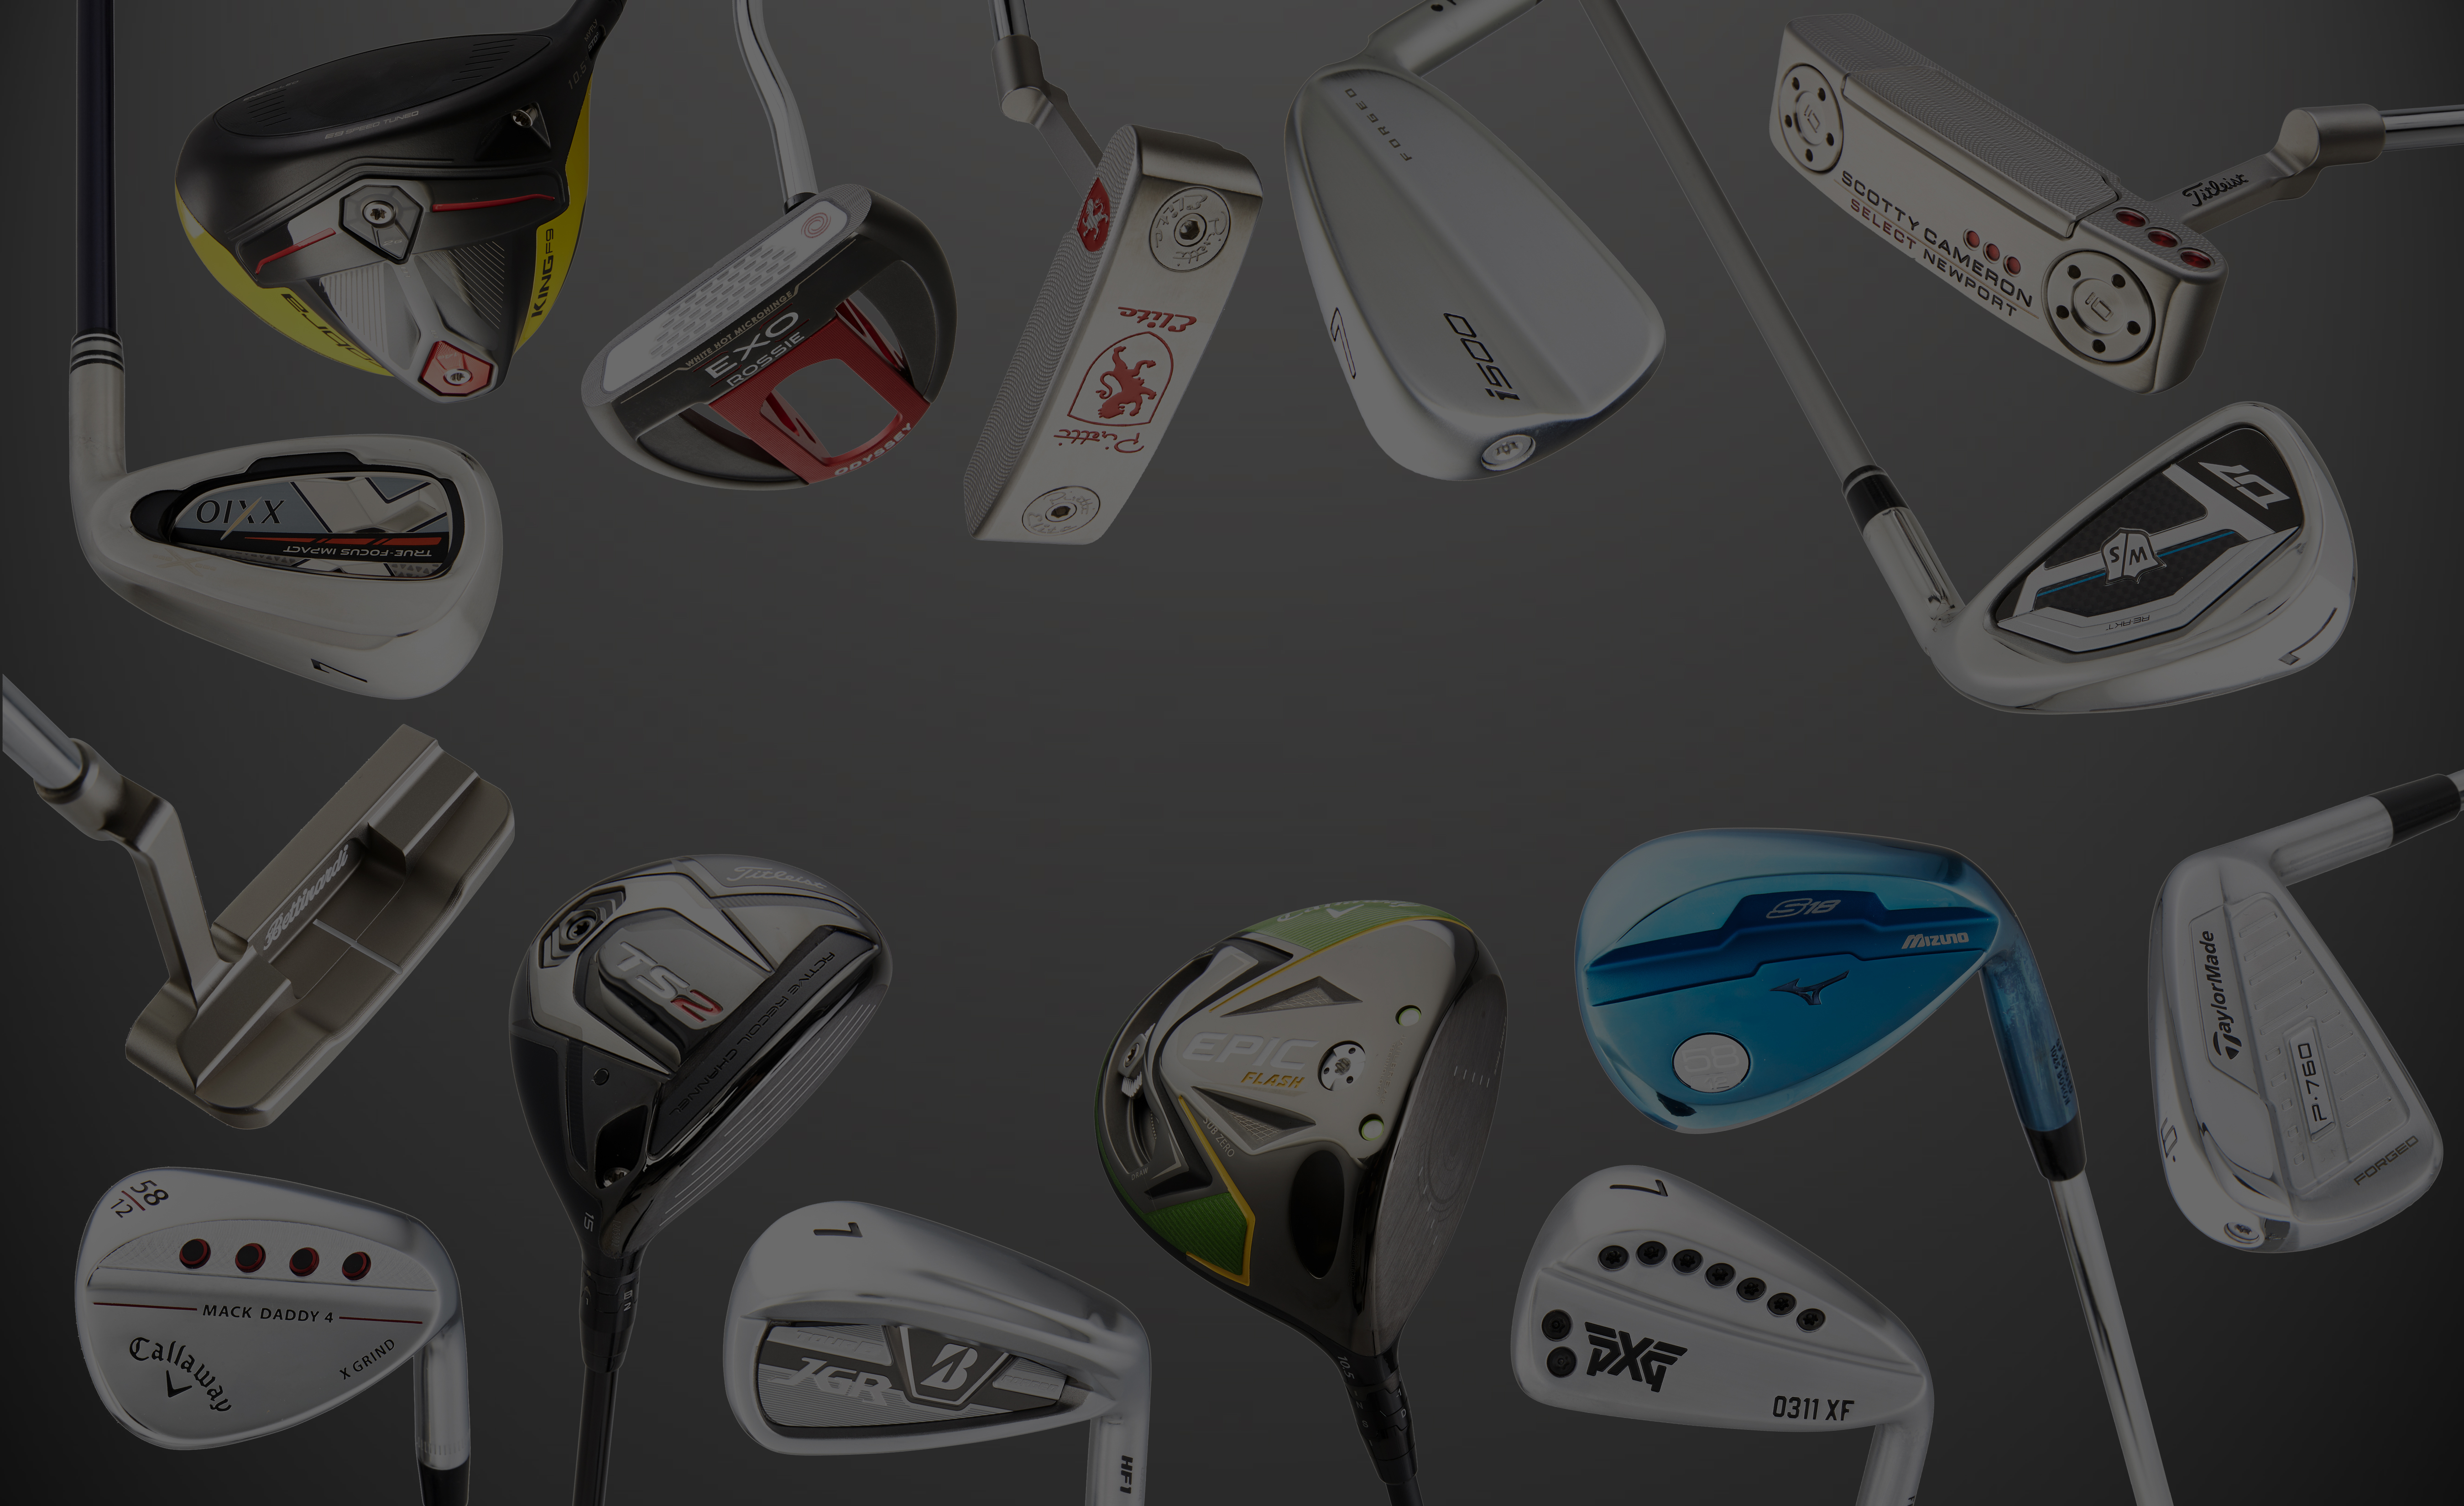 20 huge golf equipment brands you've never heard of - bunkered.co.uk